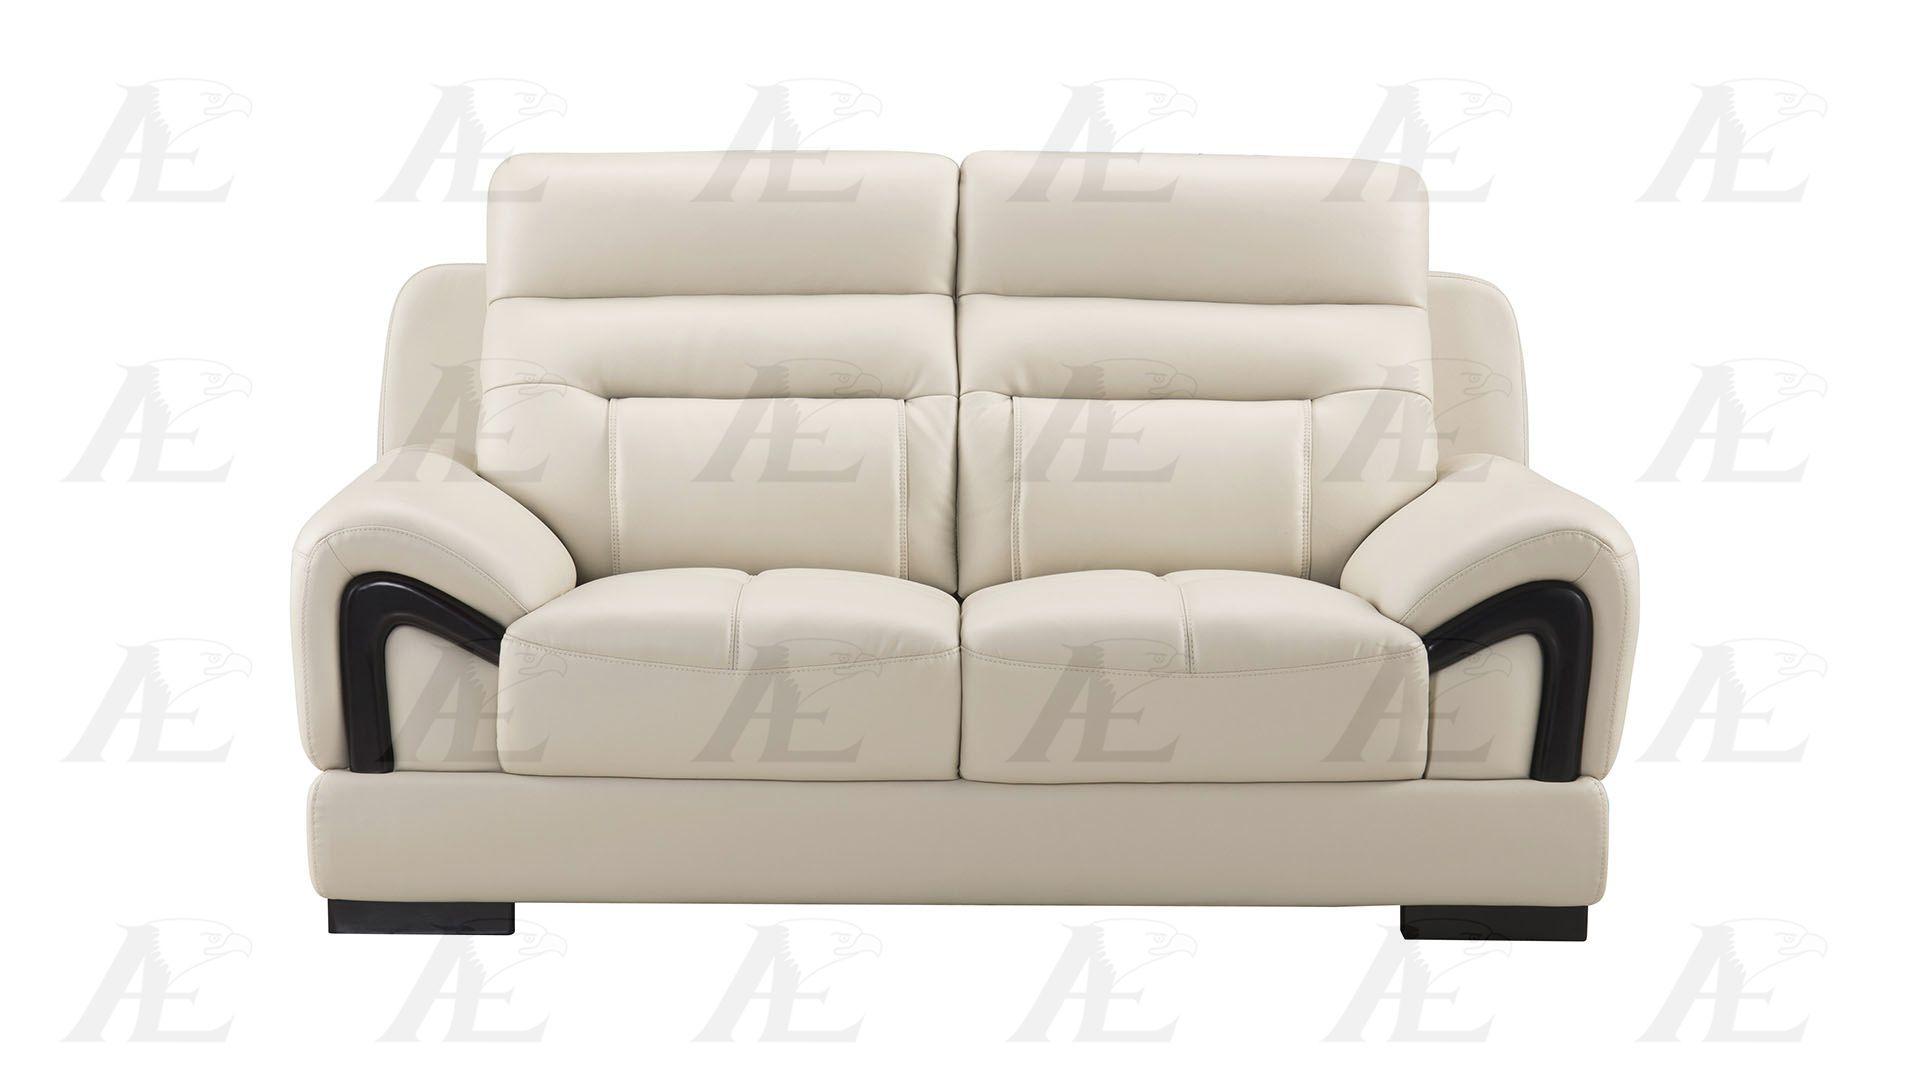 

                    
American Eagle Furniture EK-B120-LG Sofa Loveseat and Chair Set Light Gray Genuine Leather Purchase 
